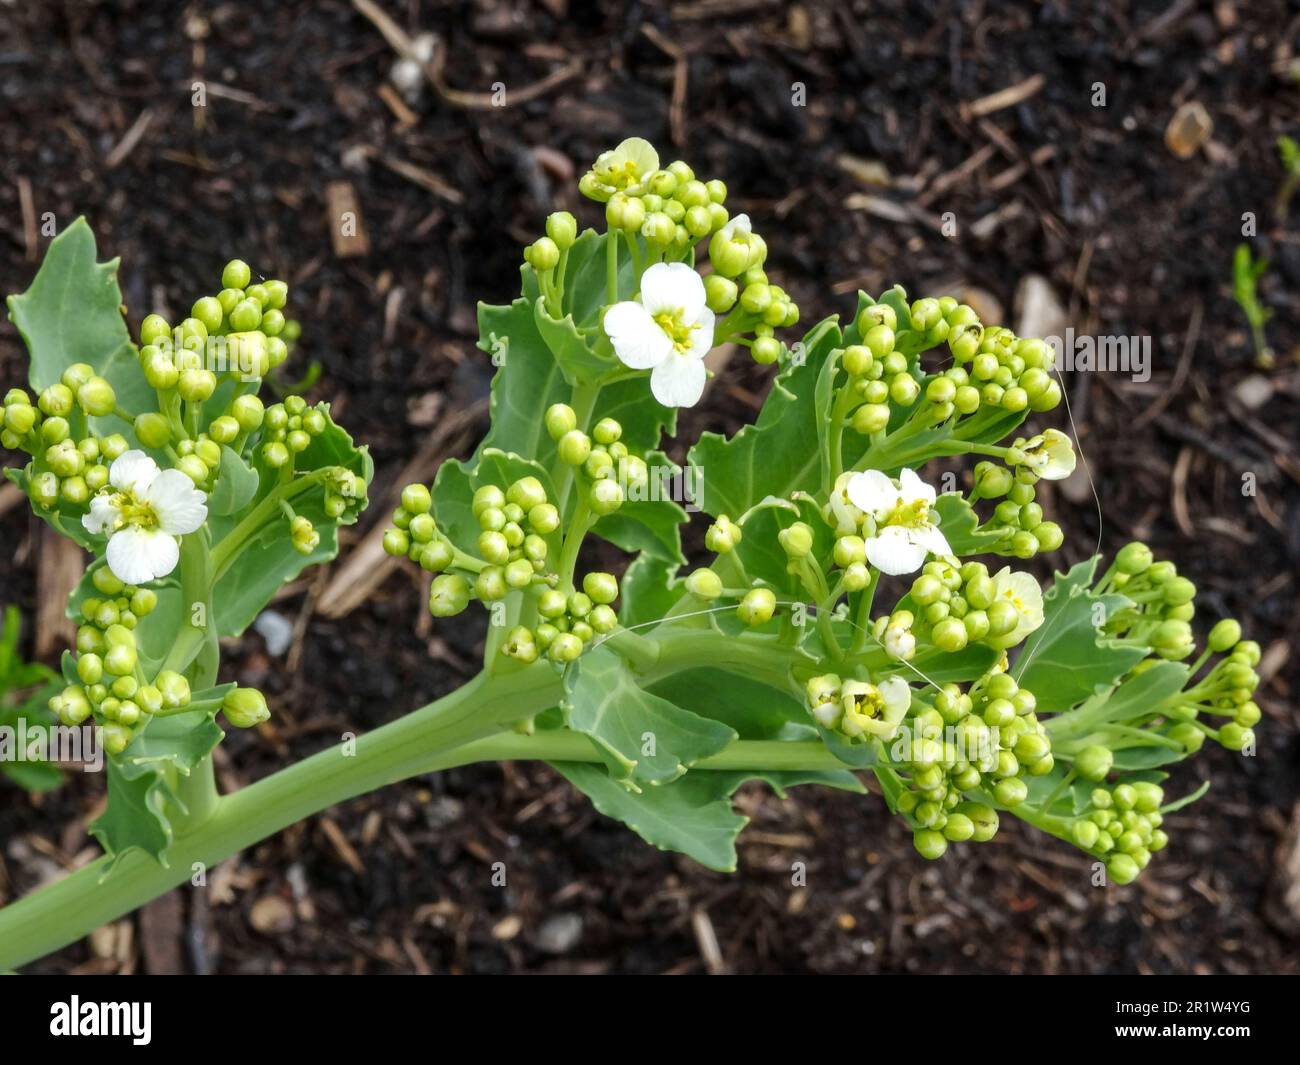 Delicious Seakale Lilywhite - Crambe maritima 'Lily White’. Natural close up vegetable plant portrait Stock Photo